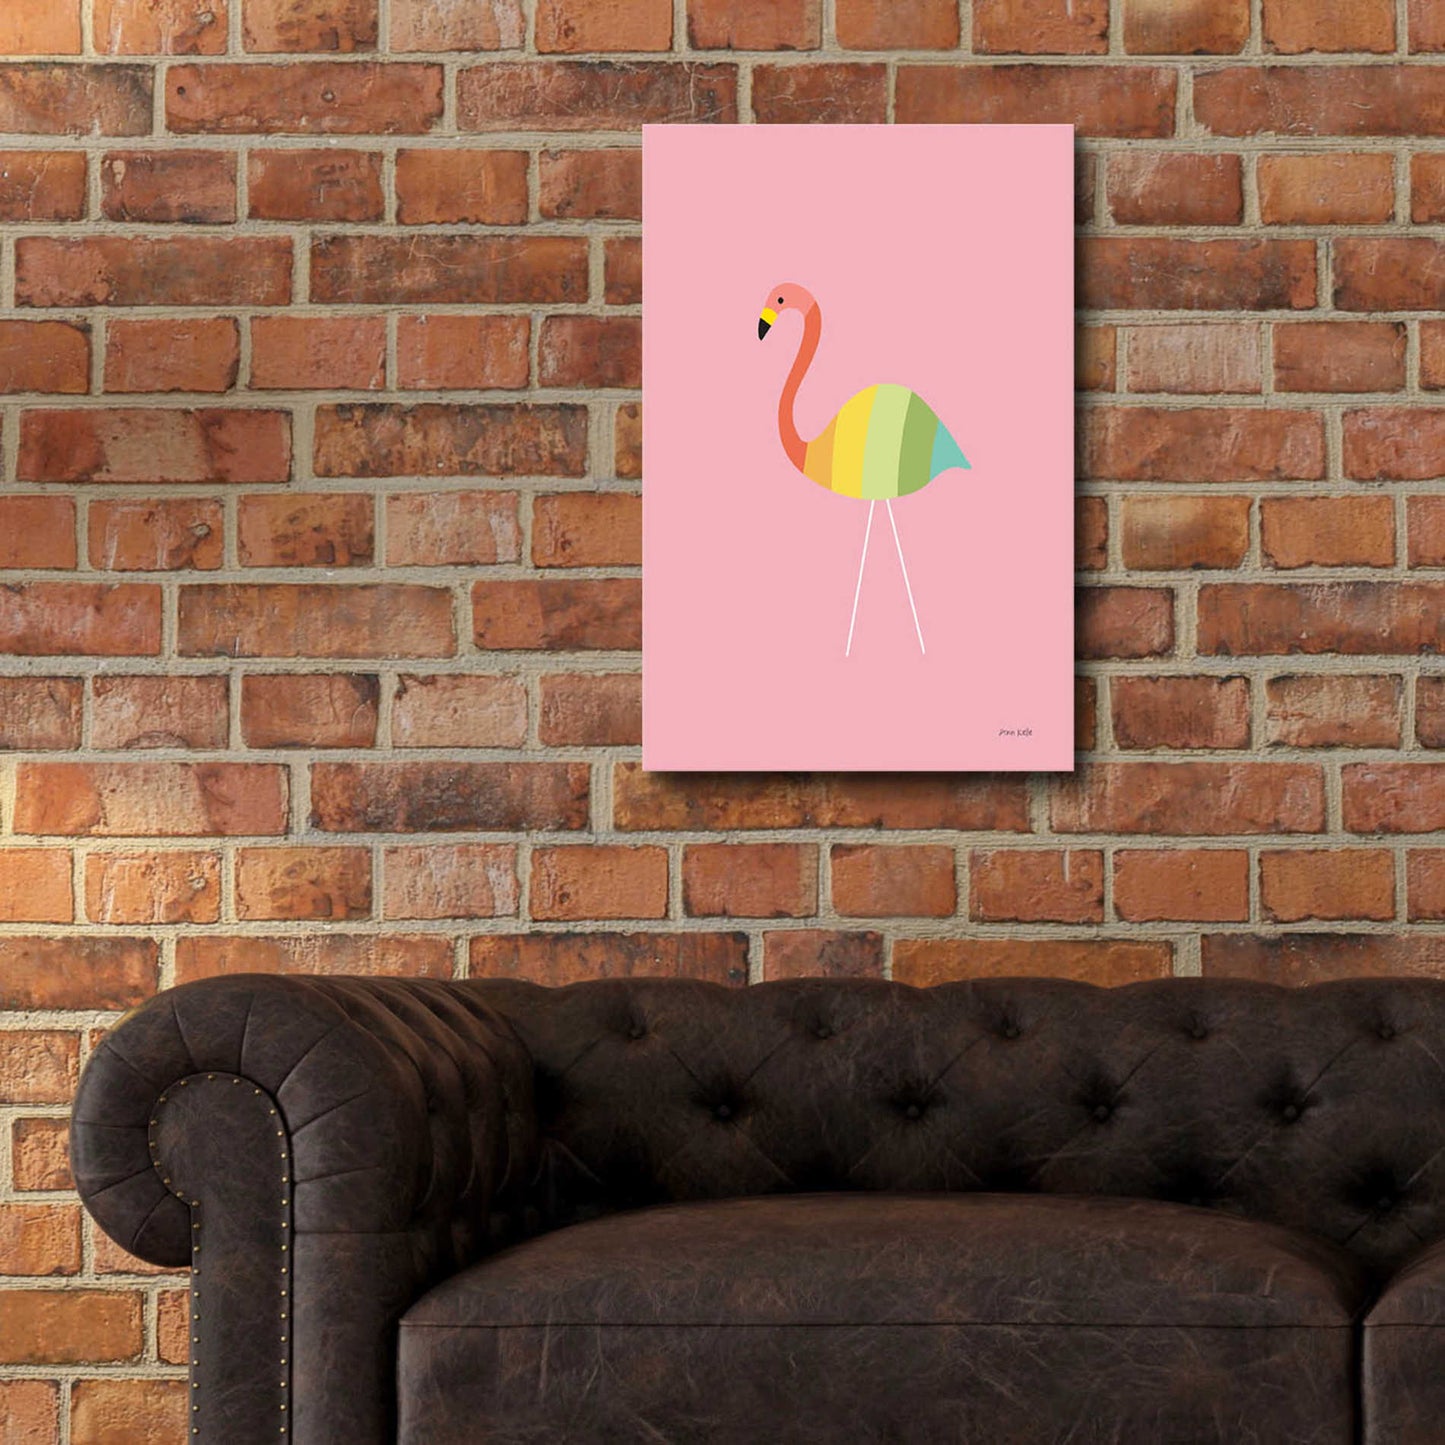 Epic Art 'Flamingo Colors' by Ann Kelle Designs, Acrylic Glass Wall Art,16x24